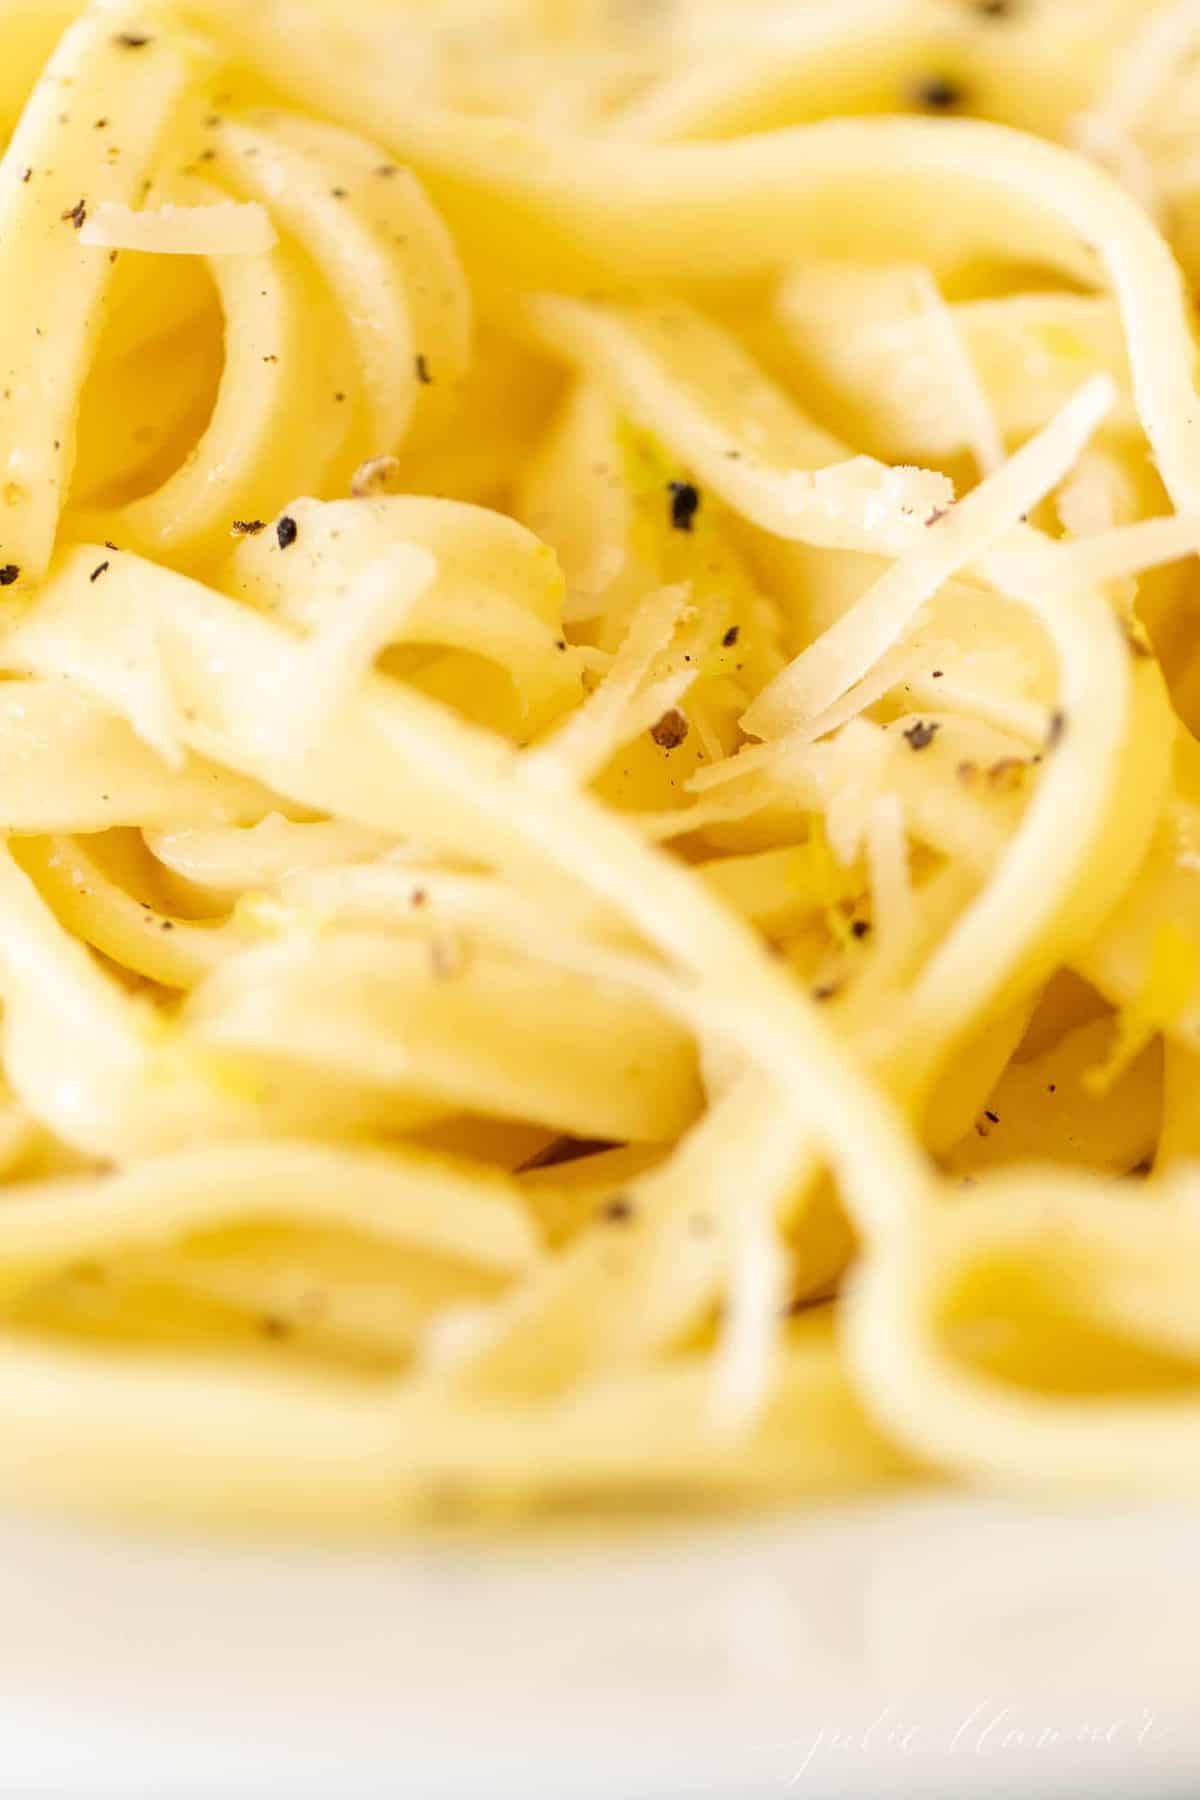 Close up shot of fettuccine noodles covered in a lemon pepper sauce.